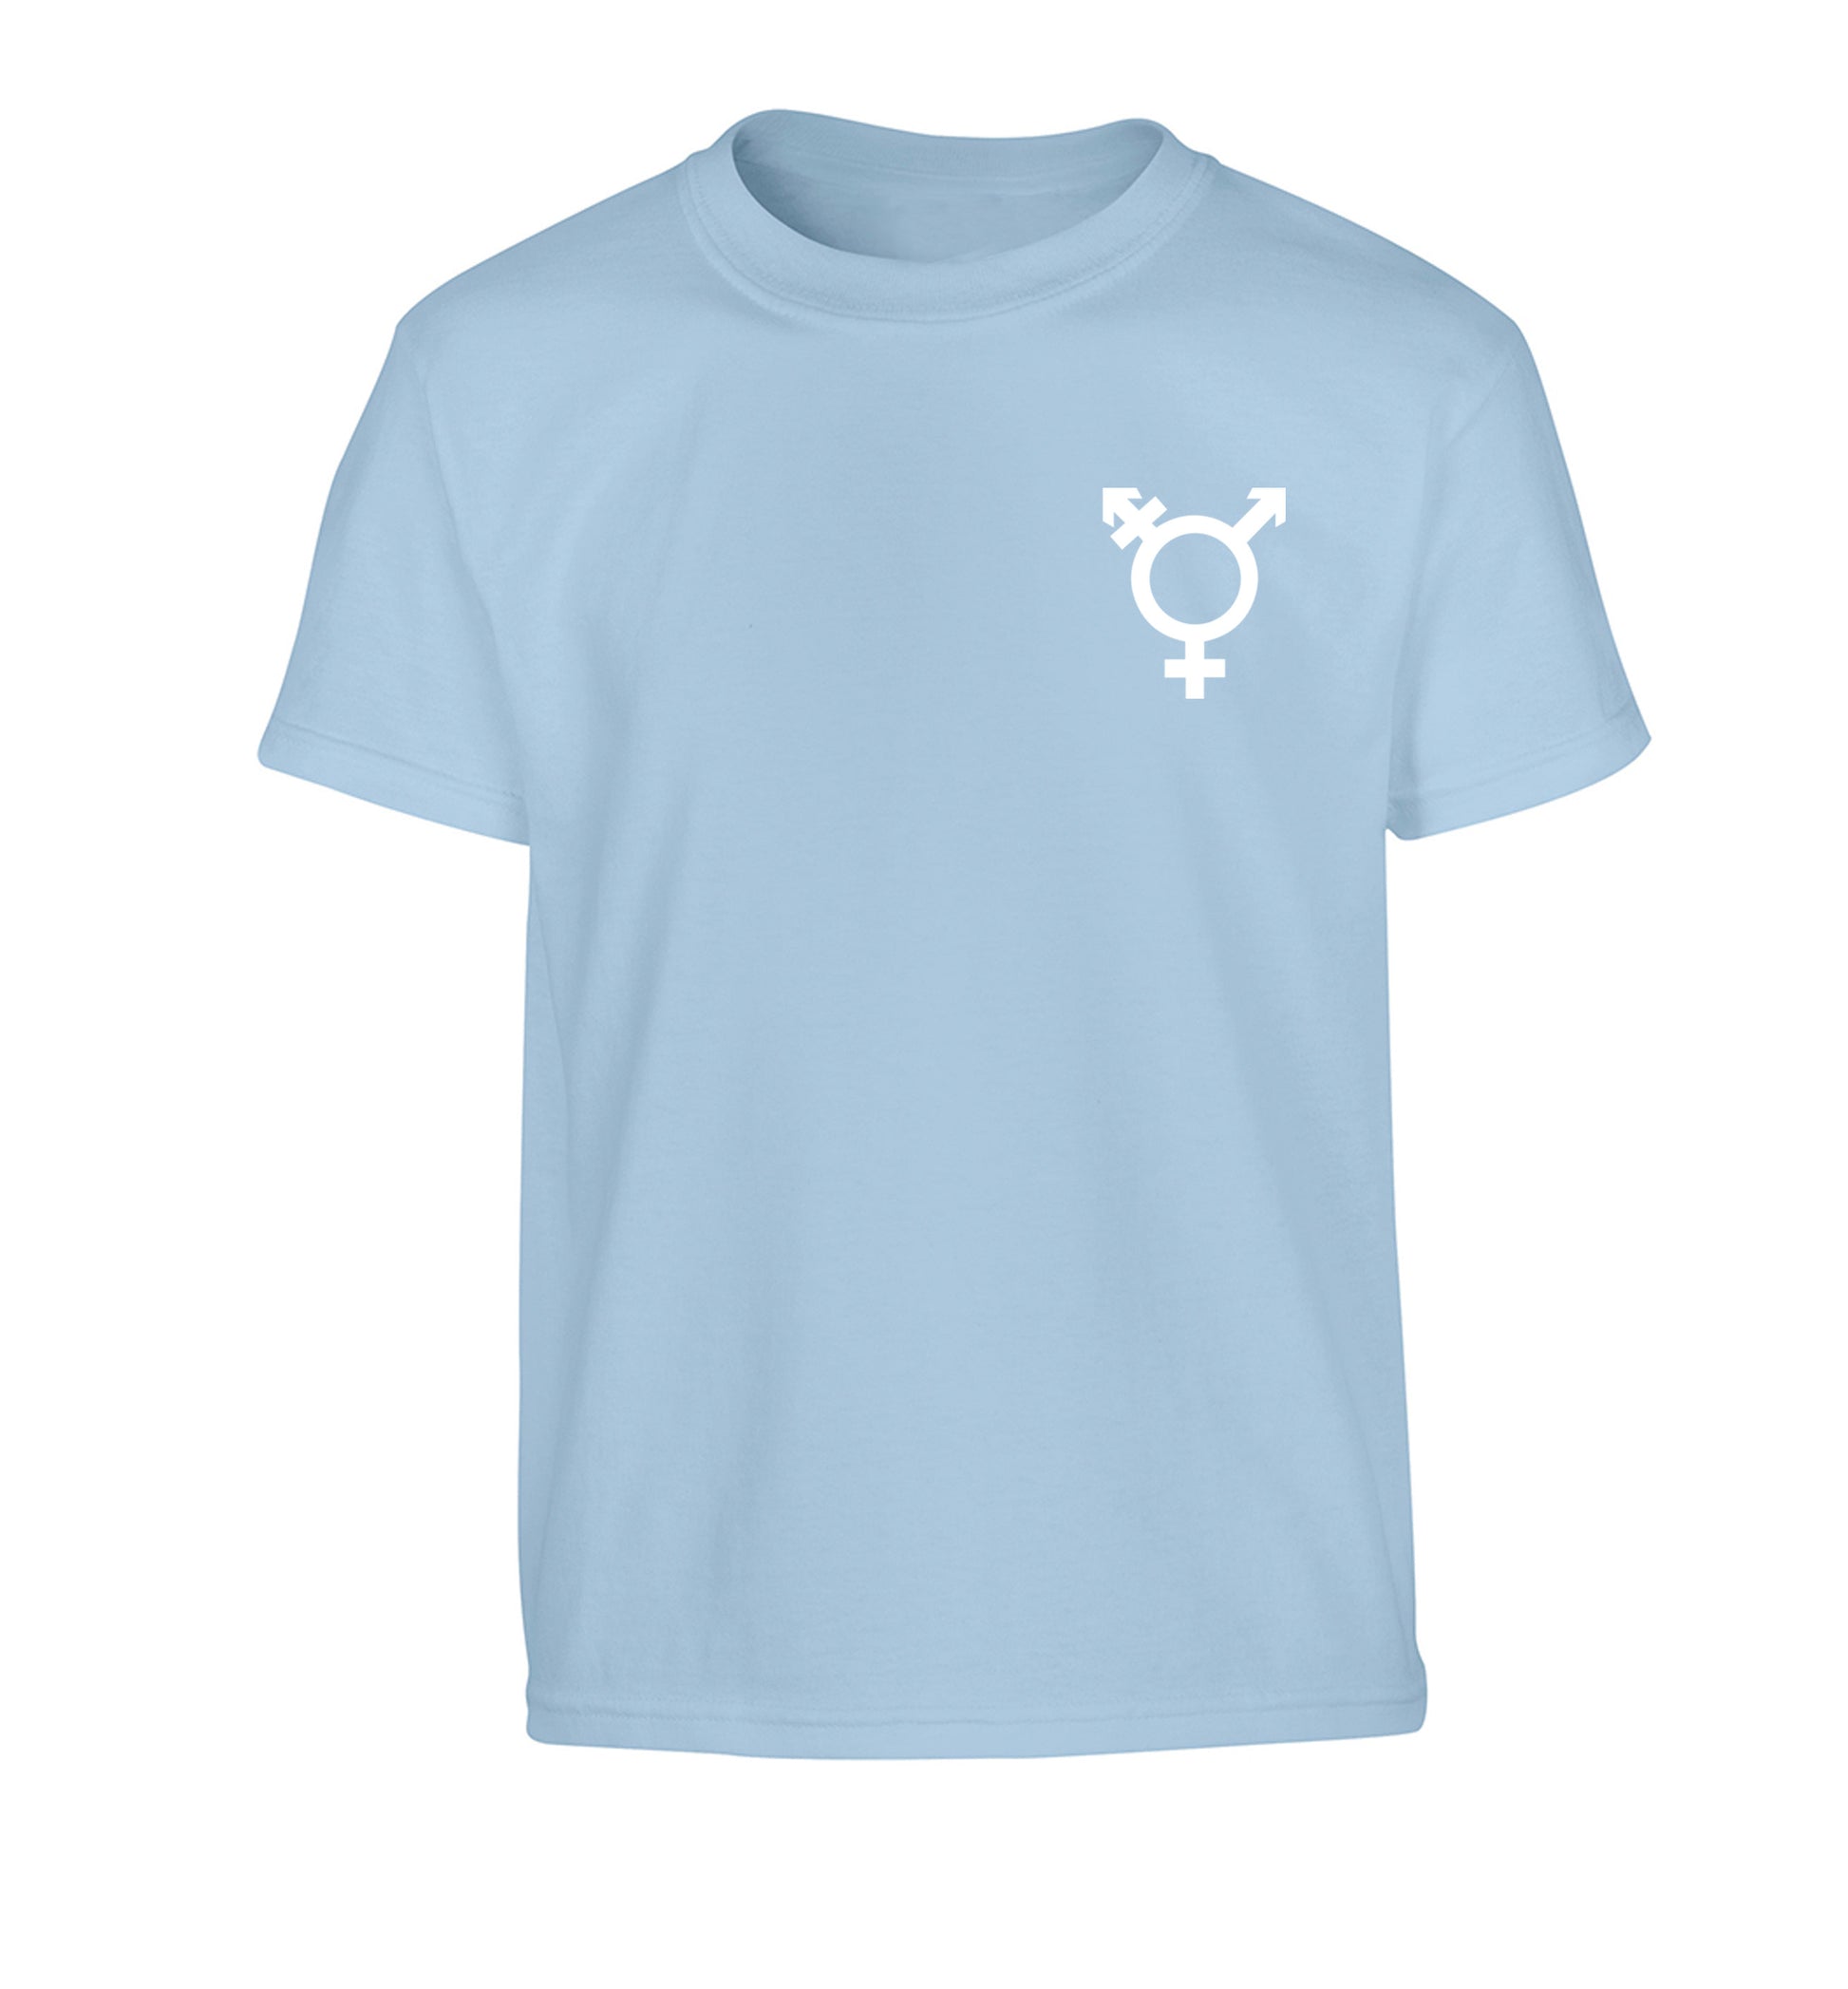 Trans gender symbol pocket Children's light blue Tshirt 12-14 Years